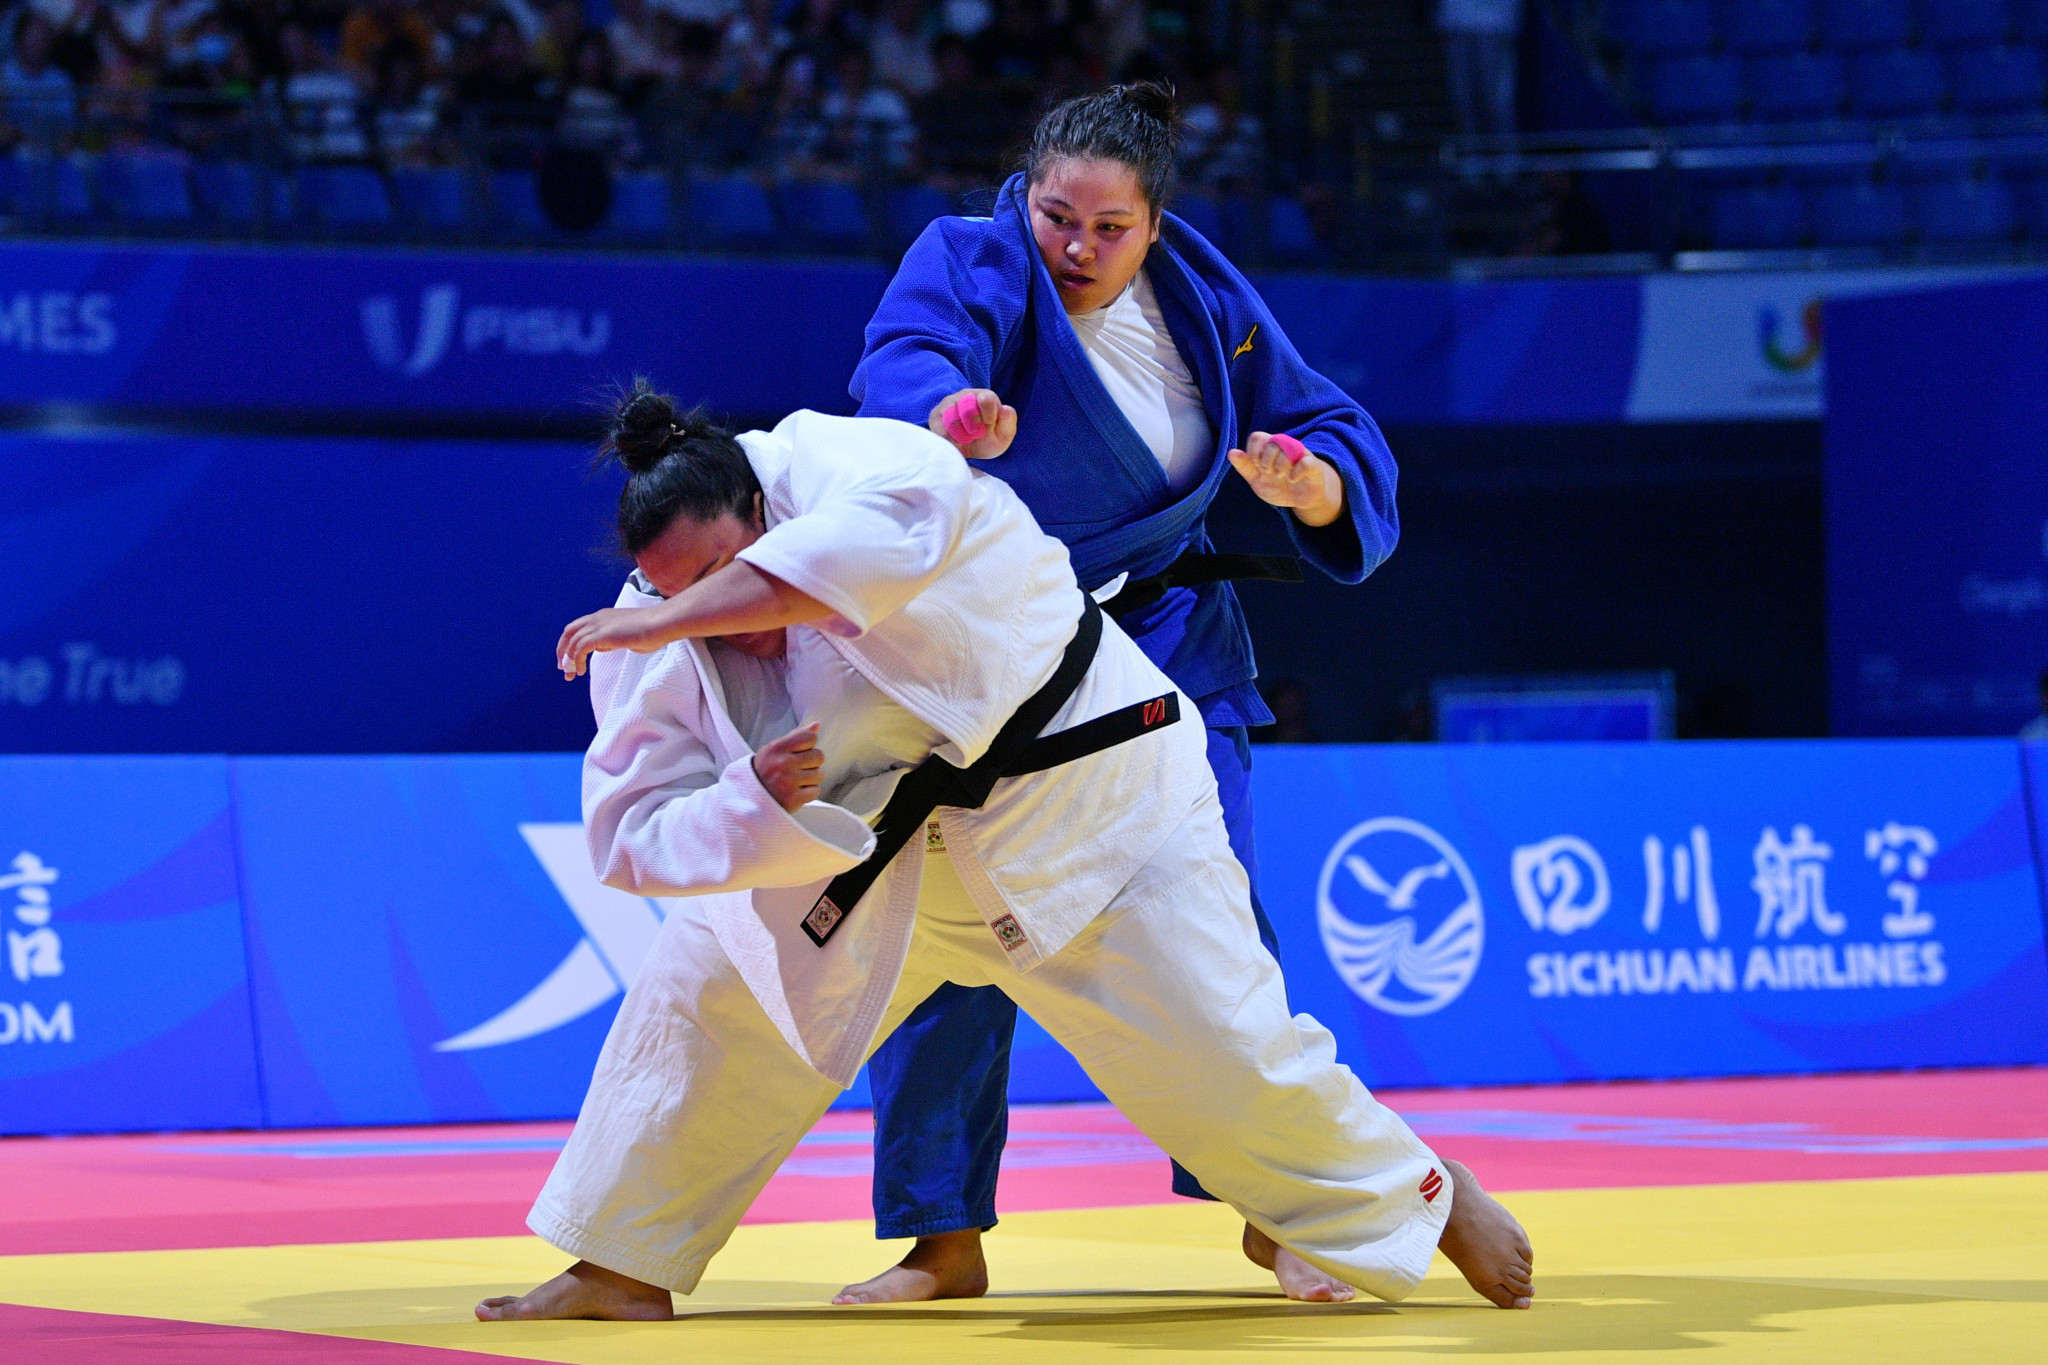 Agatha Martins Silva, in white, of Brazil and Akerke Ramazanova of Kazakhstan in action in the women’s judo +78 kilograms bronze medal match ©Chengdu 2021